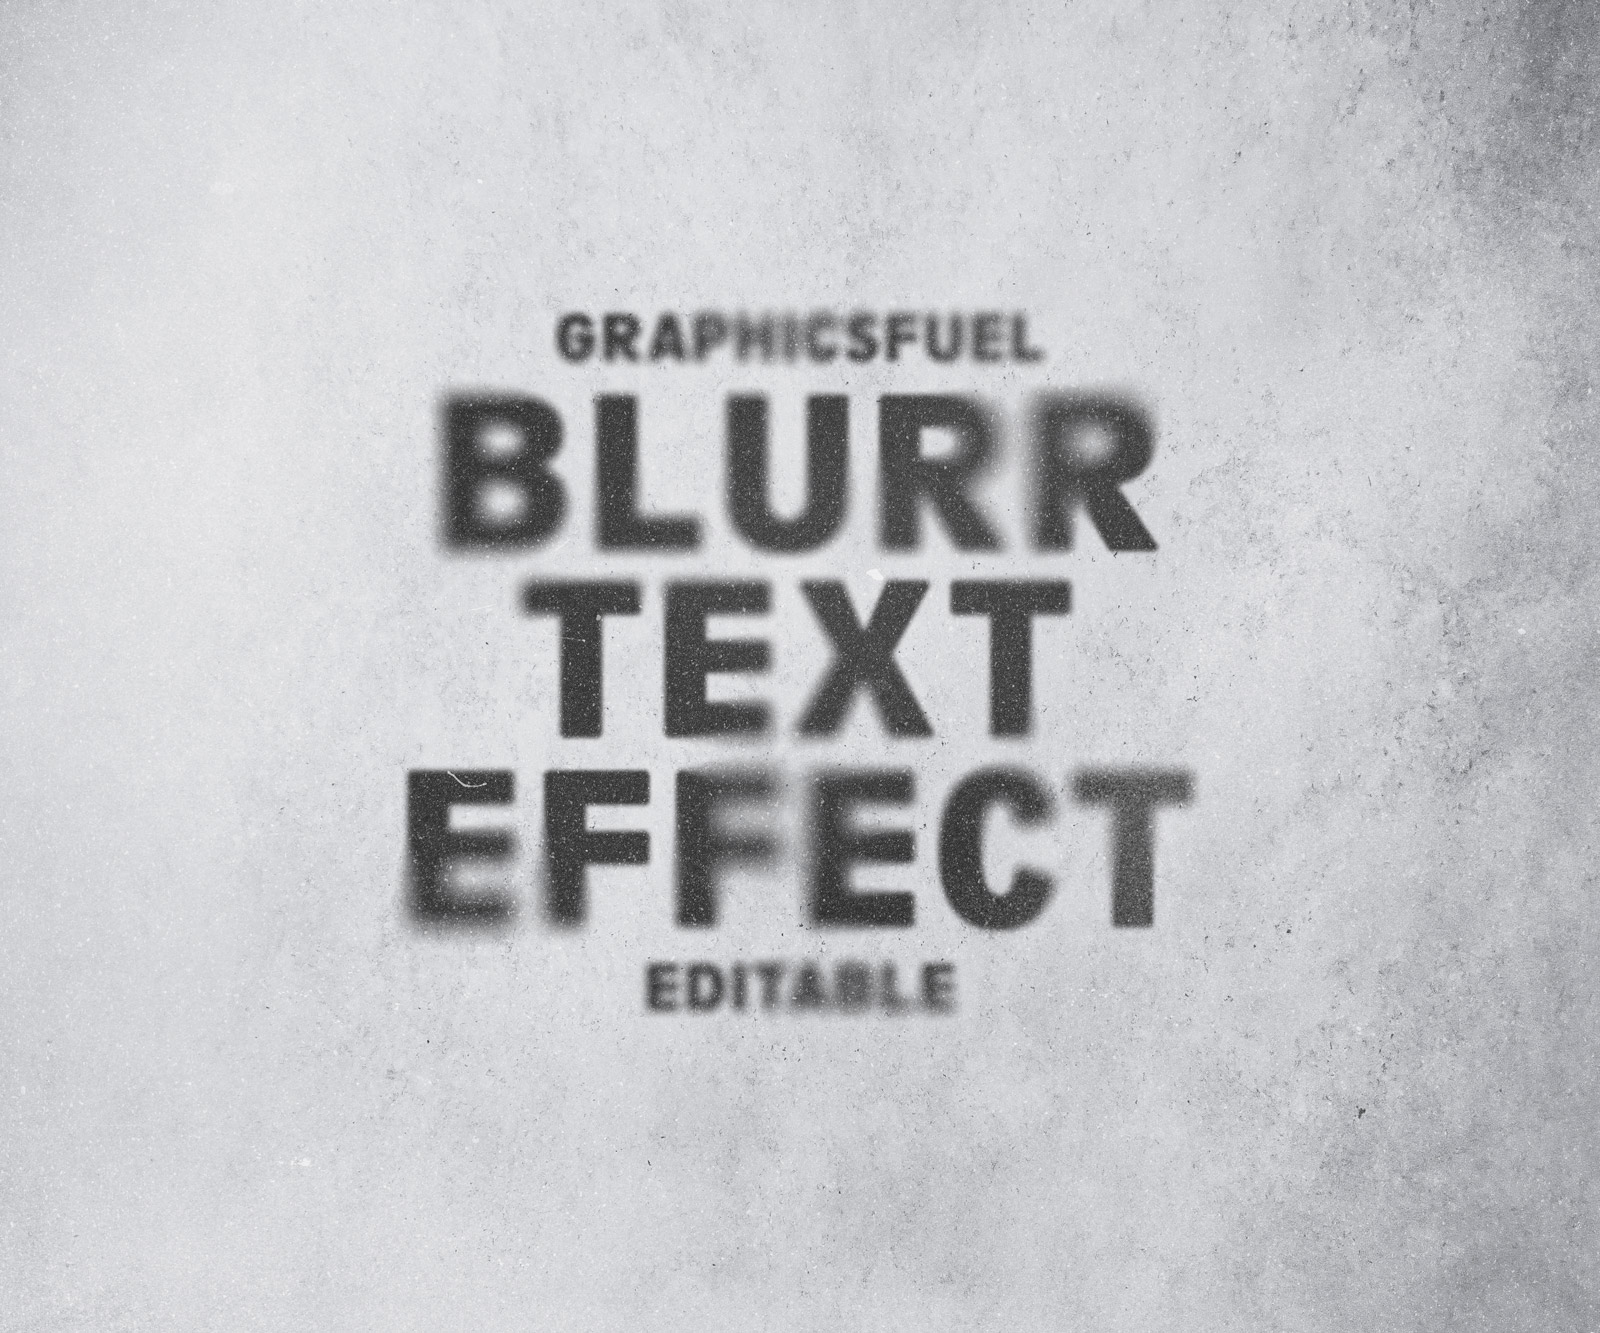 Ghost Blur Text Effect